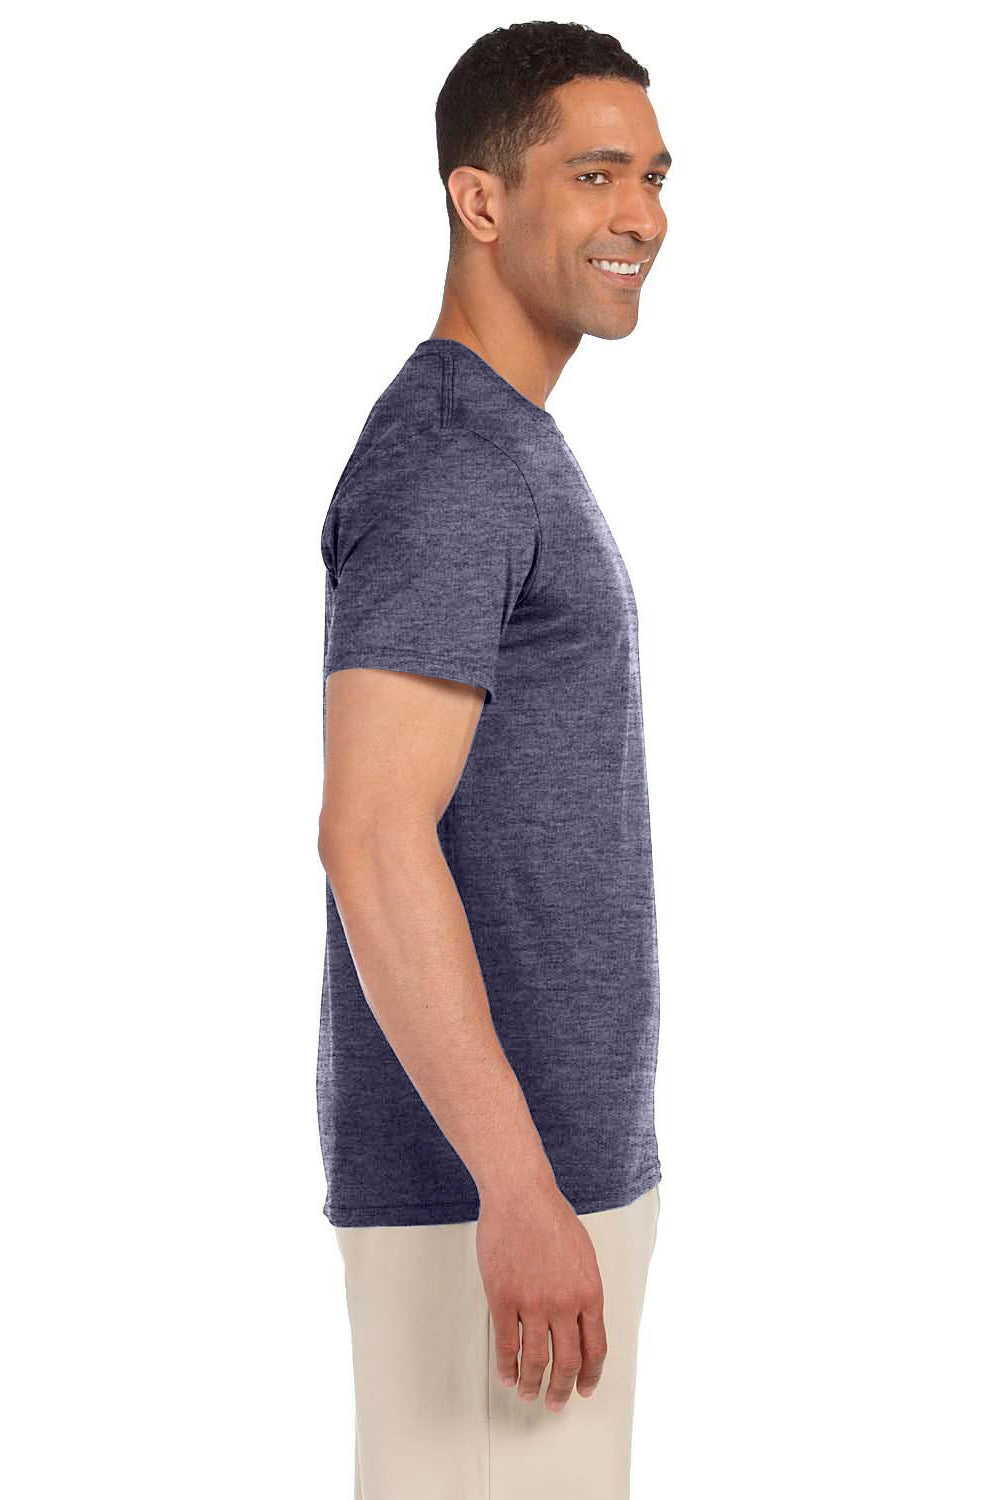 Gildan G640 Mens Softstyle Short Sleeve Crewneck T-Shirt Heather Navy Blue Side